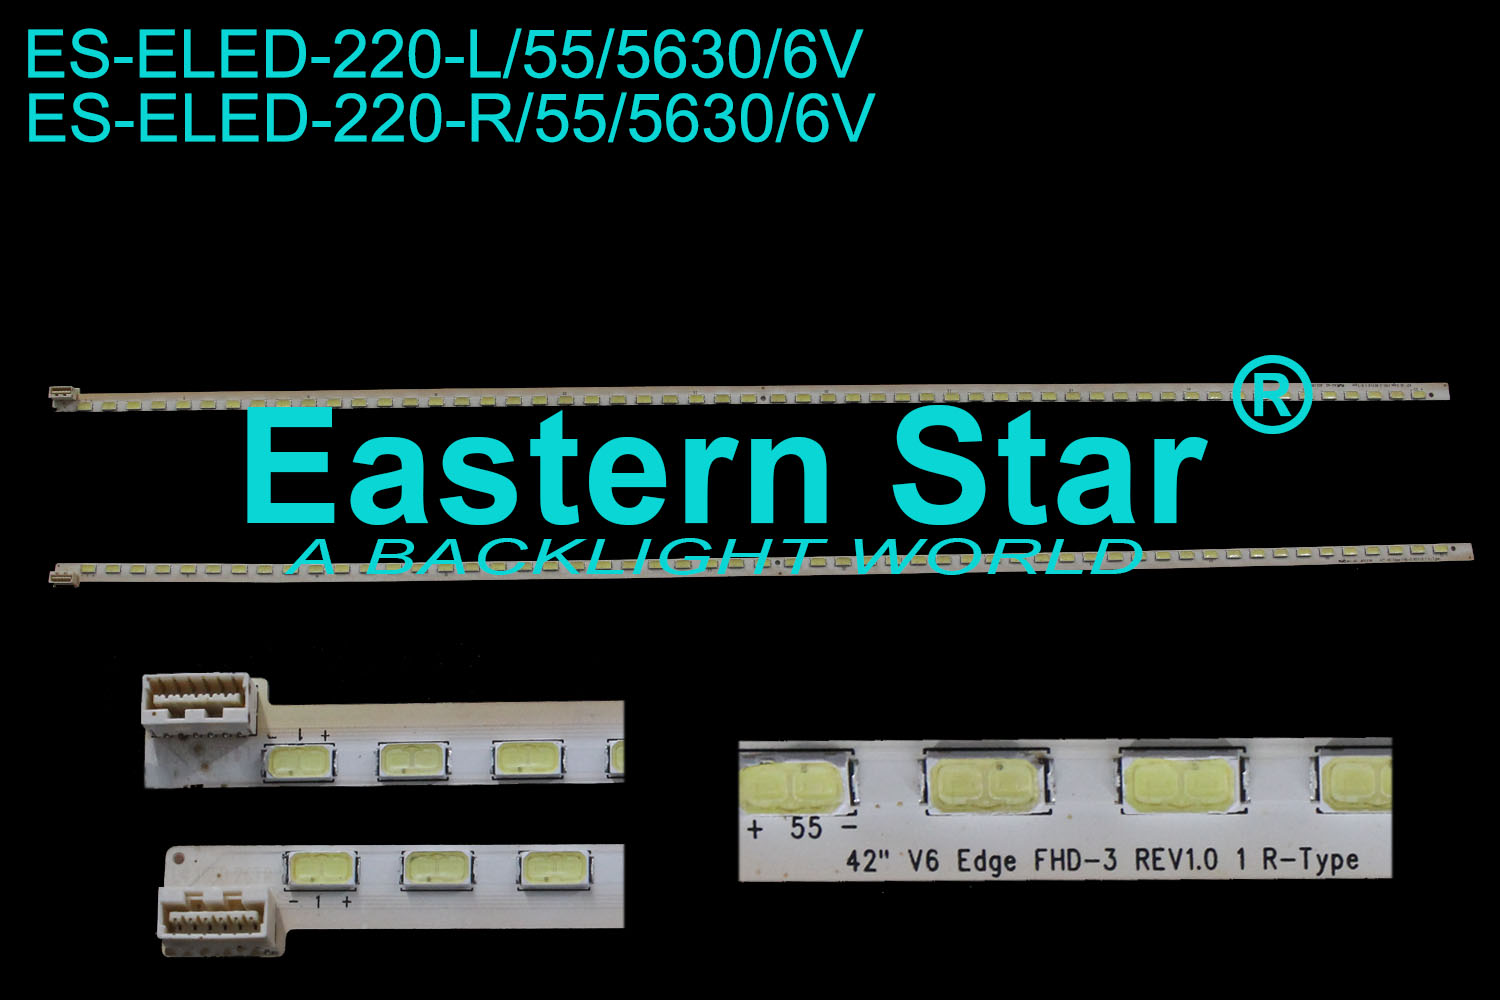 ES-ELED-220 ELED/EDGE TV backlight 42'' 55LEDs 42'' V6 Edge FHD-3 REV1.0 1 L/R-Type LED STRIPS(2)